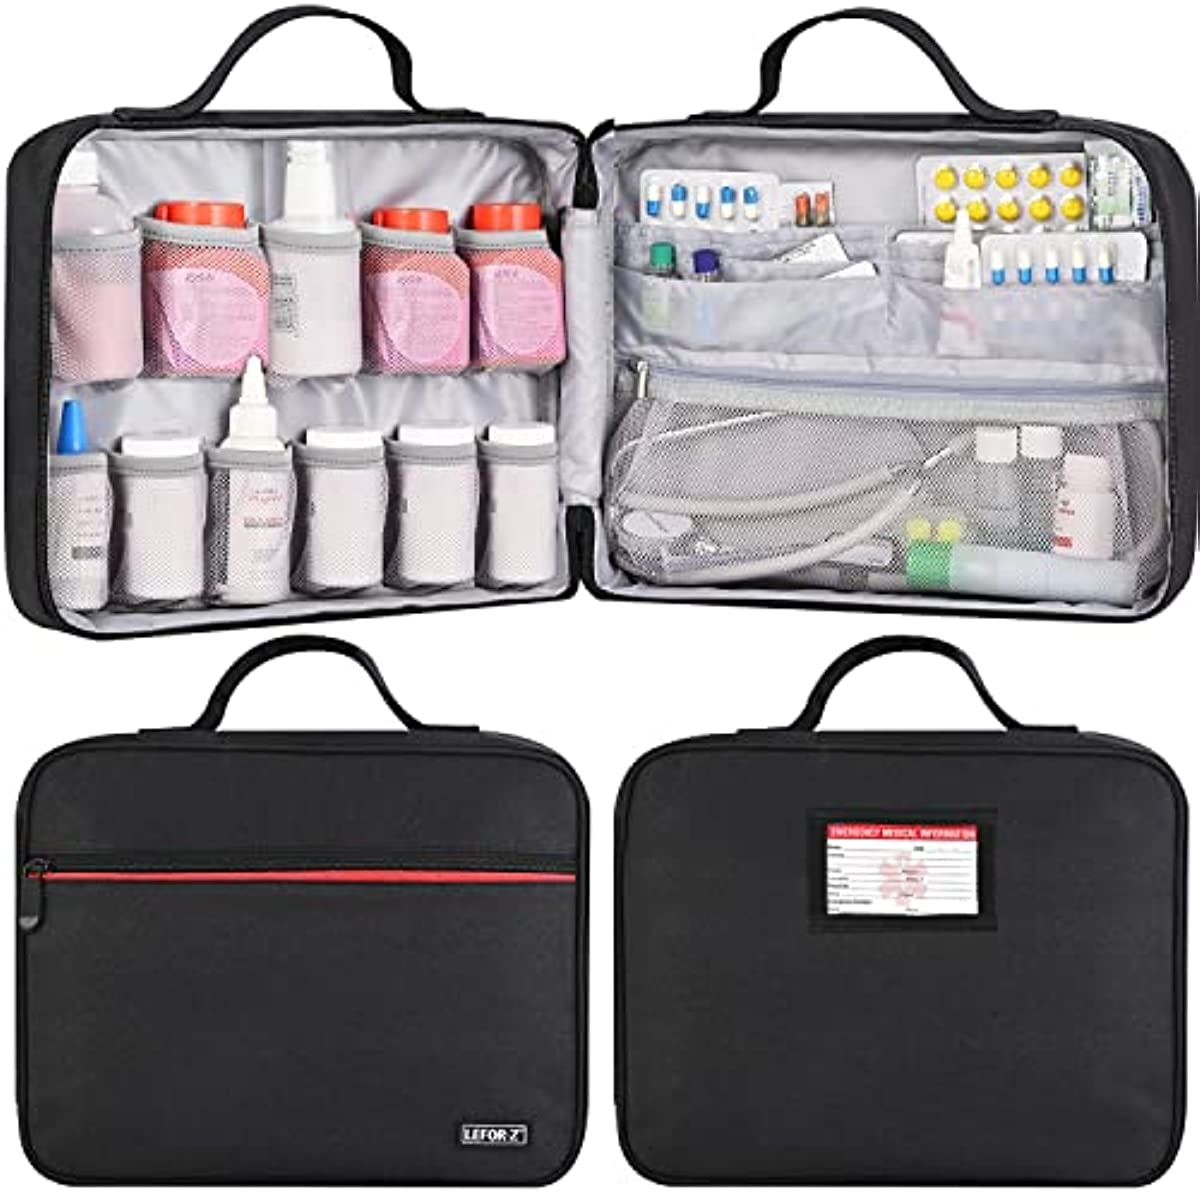 Large Medicine Bag,Pill Bottle Organizer,Travel Medicine Storage Case with Handle & Fixed Pockets for Vitamines,Medication,Medical Supplies